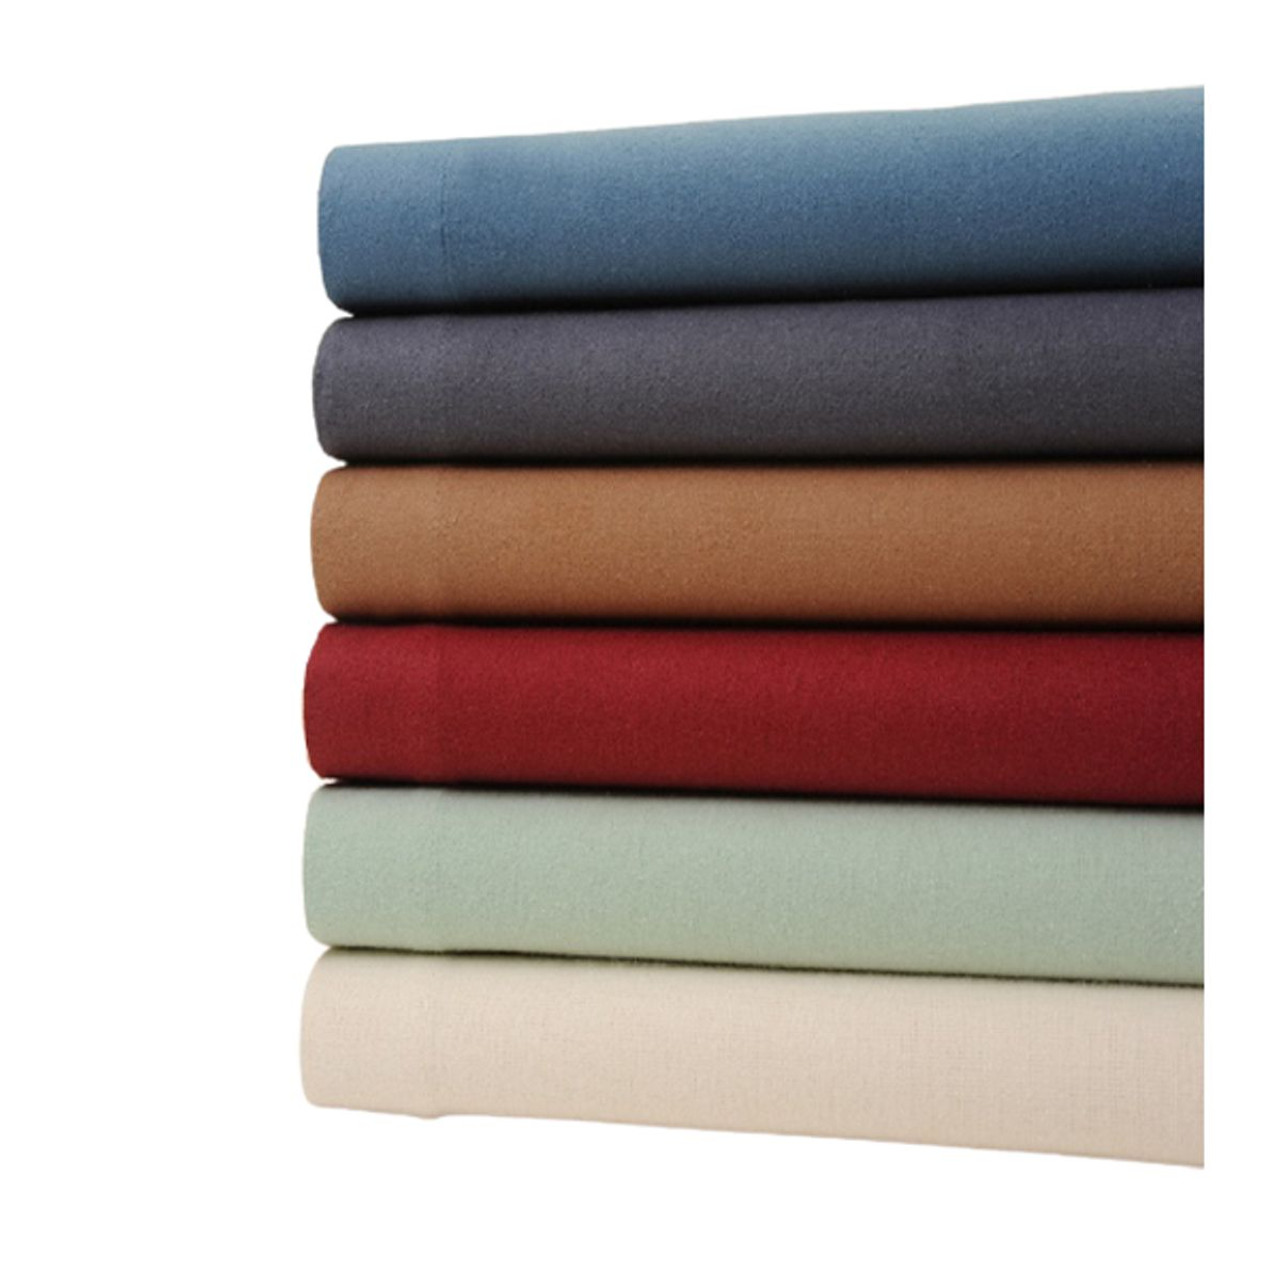 Bibb Home® 100% Cotton Solid 4-Piece Flannel Sheet Set product image